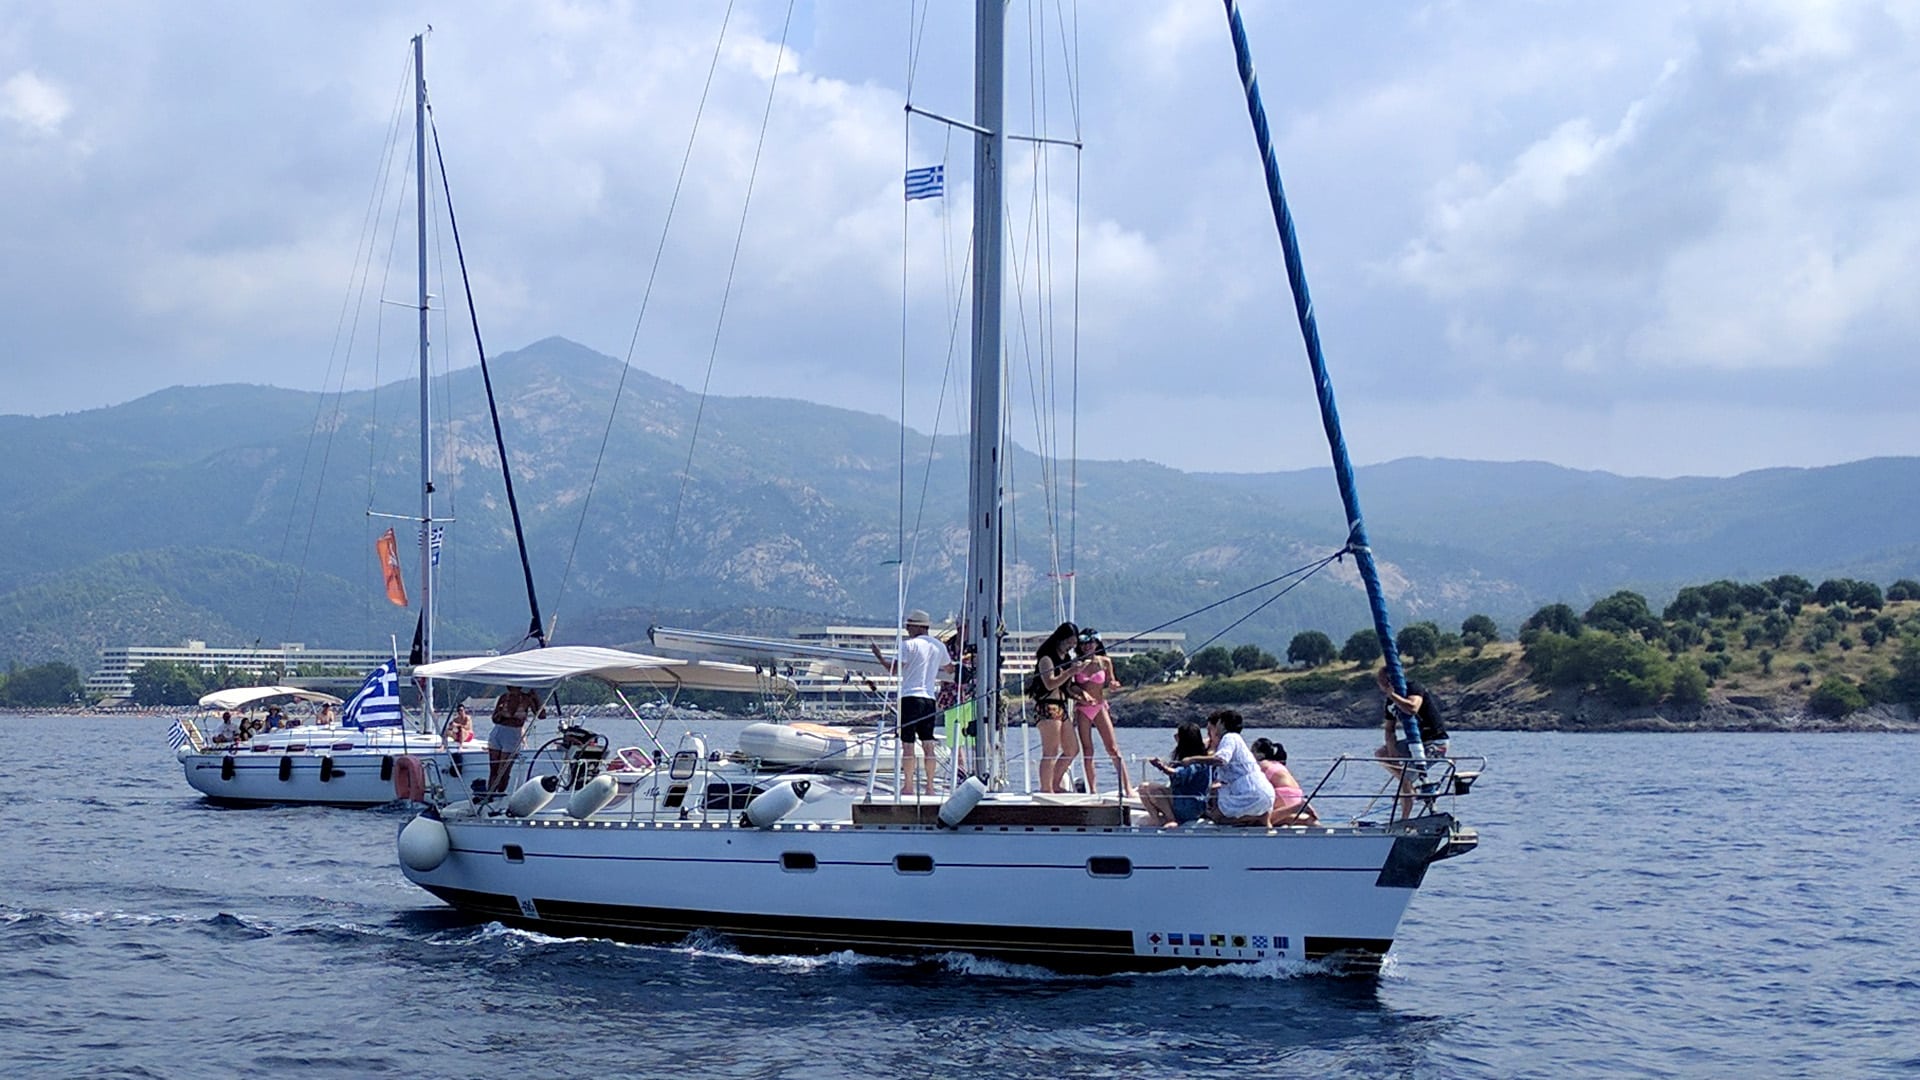 Halkidiki daily boat trips, Sailboats in Halkidiki - 2 -3 or more ...